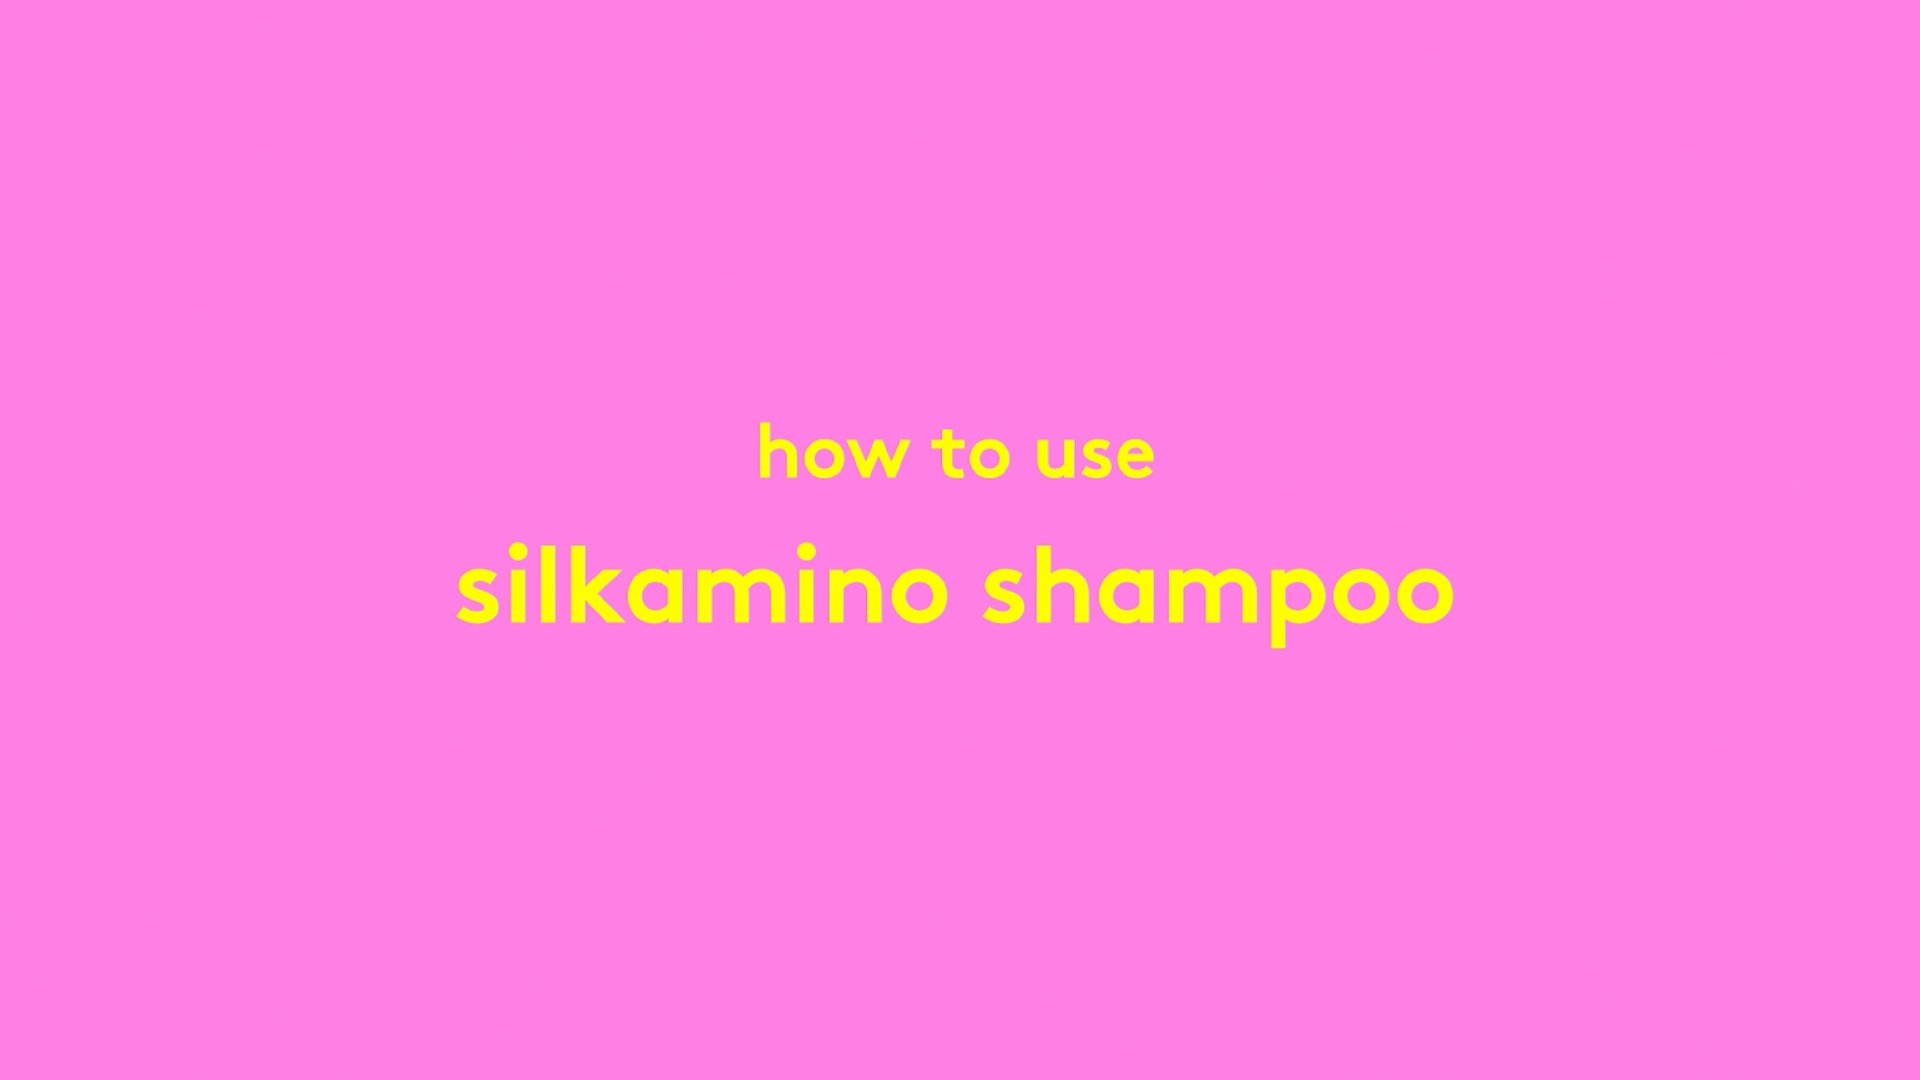 Vidéo expliquant comment utiliser le shampooing Silkamino avec Chris McMillan